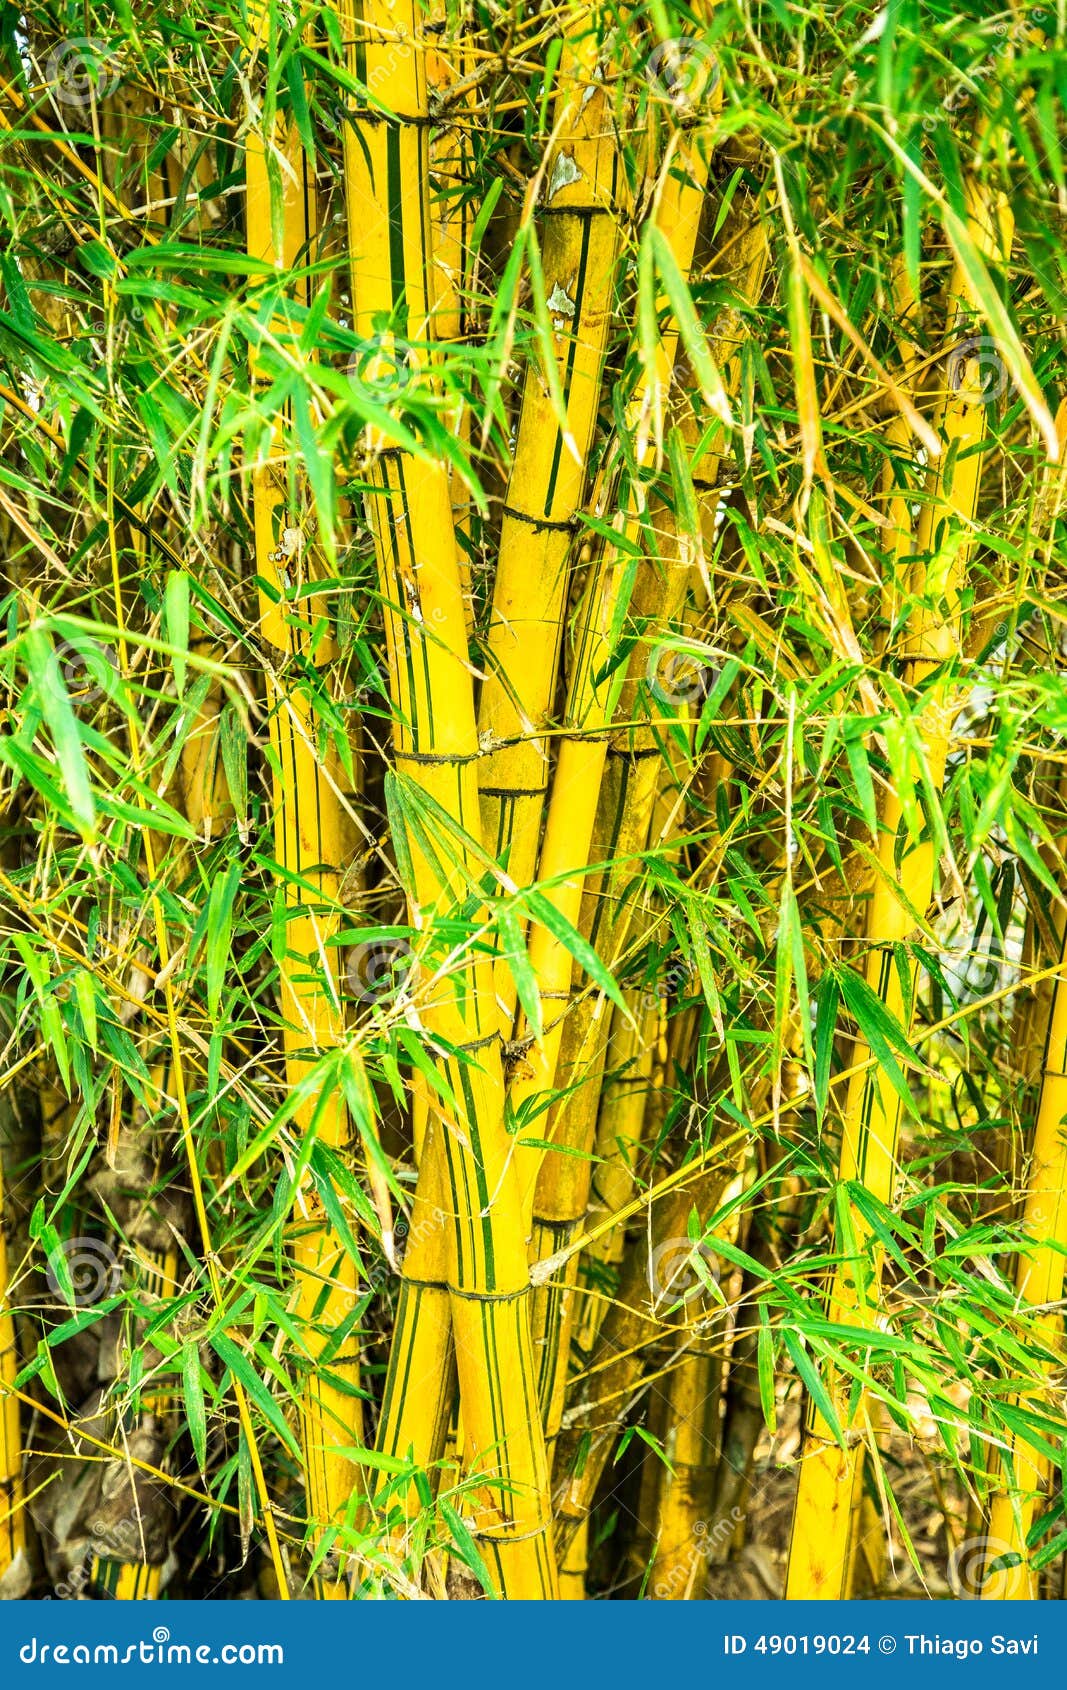 bamboo brazil bush ornamental material